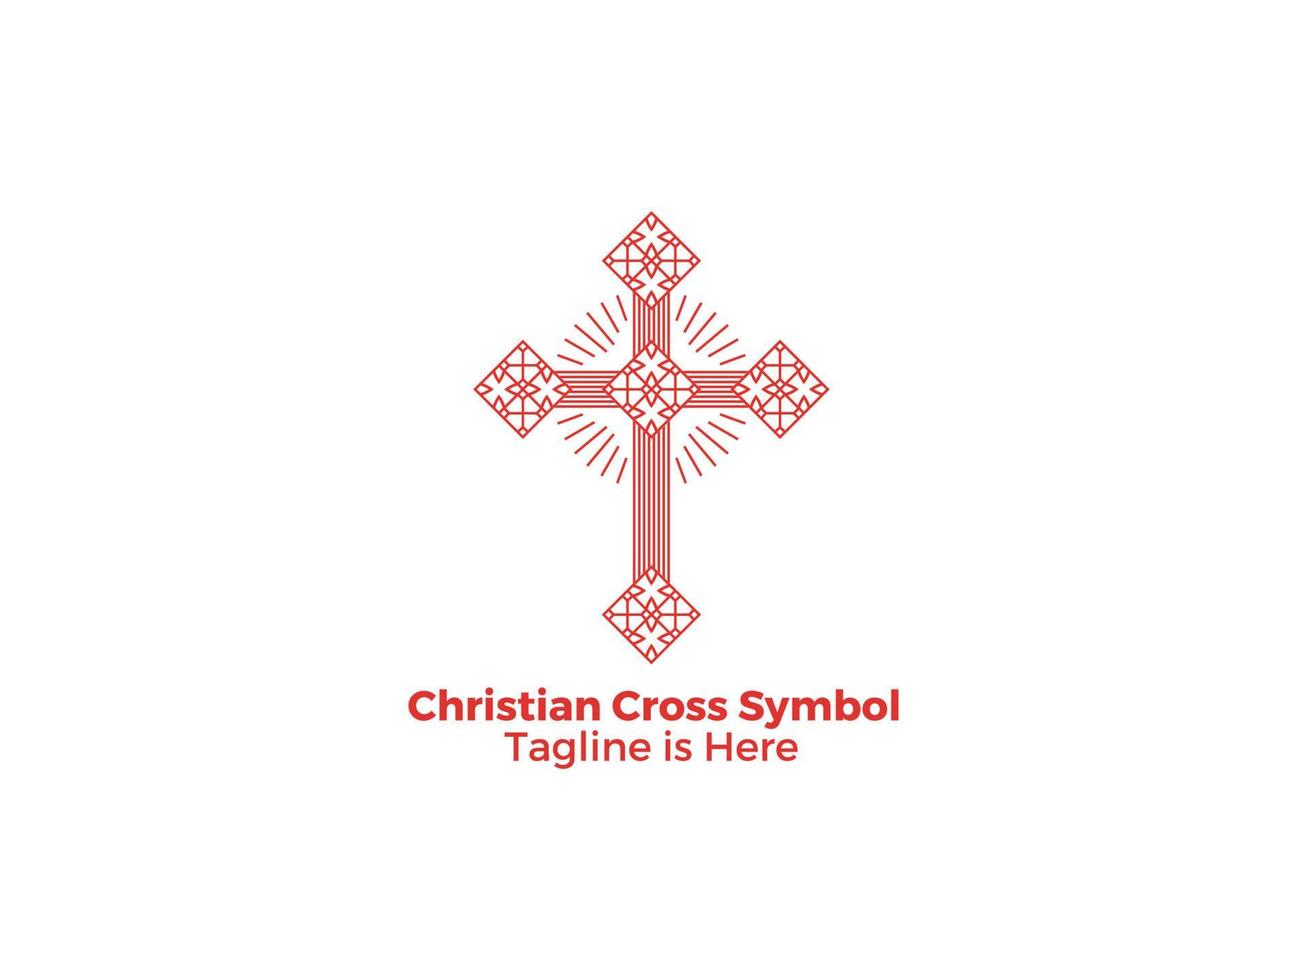 Kreuz Religion Katholizismus christliche Symbole Jesus Kirche freier Vektor